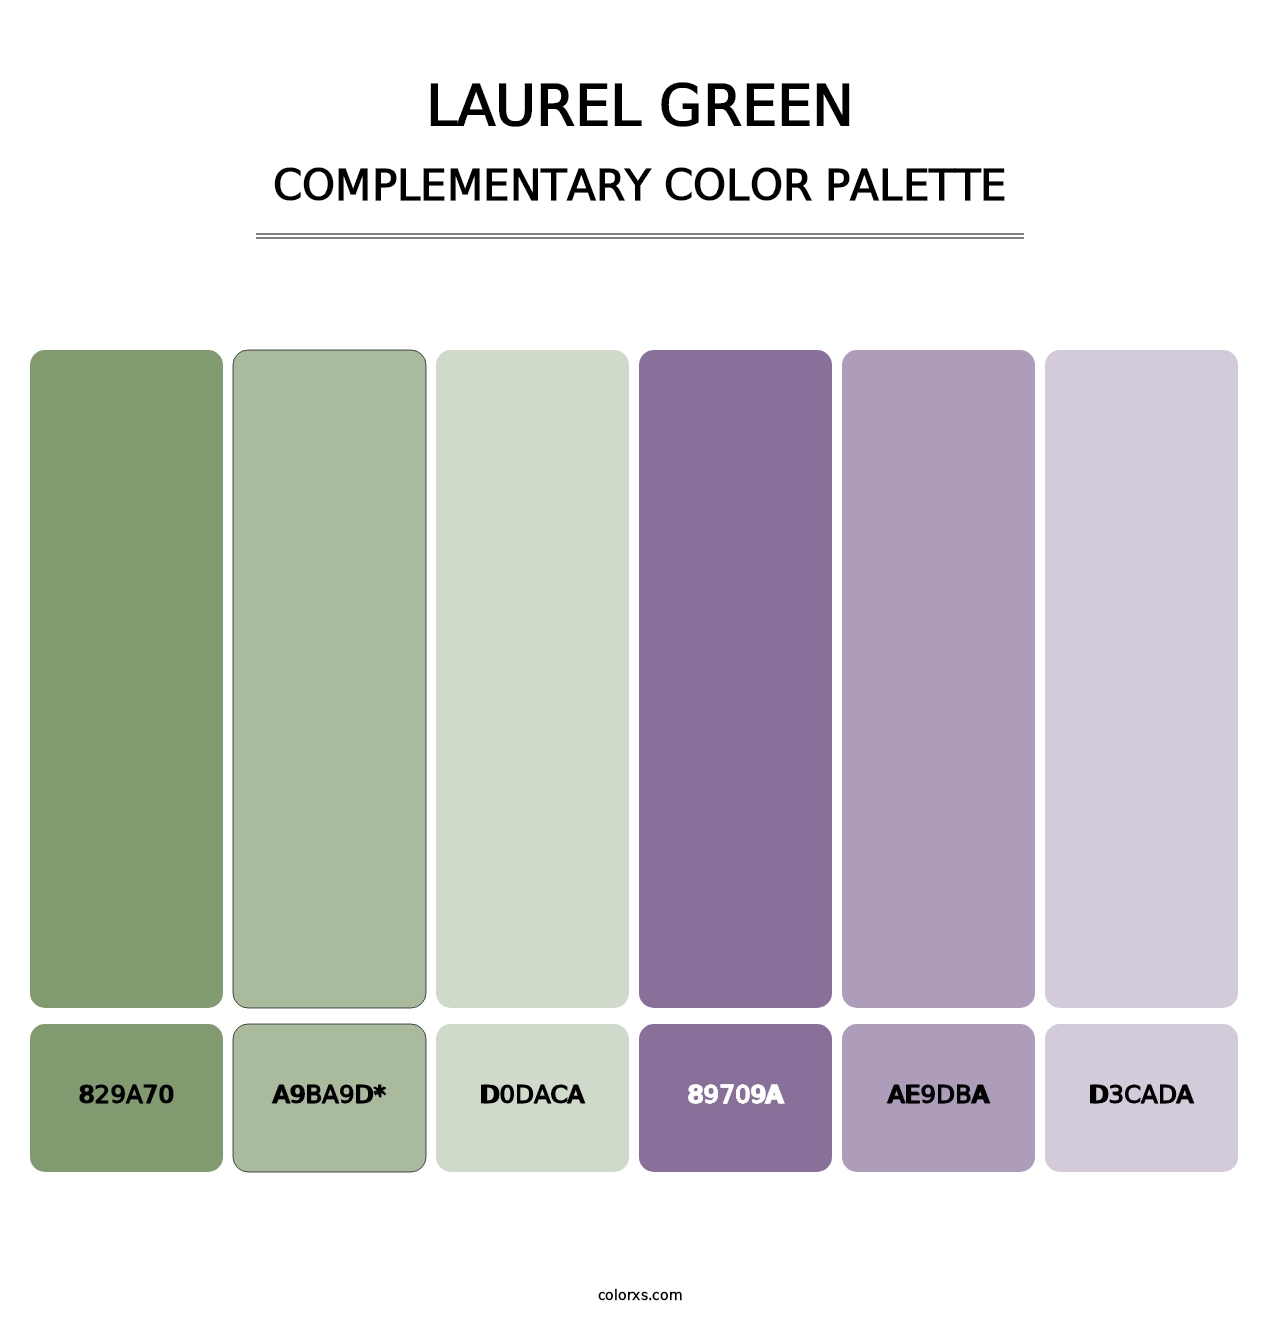 Laurel Green - Complementary Color Palette